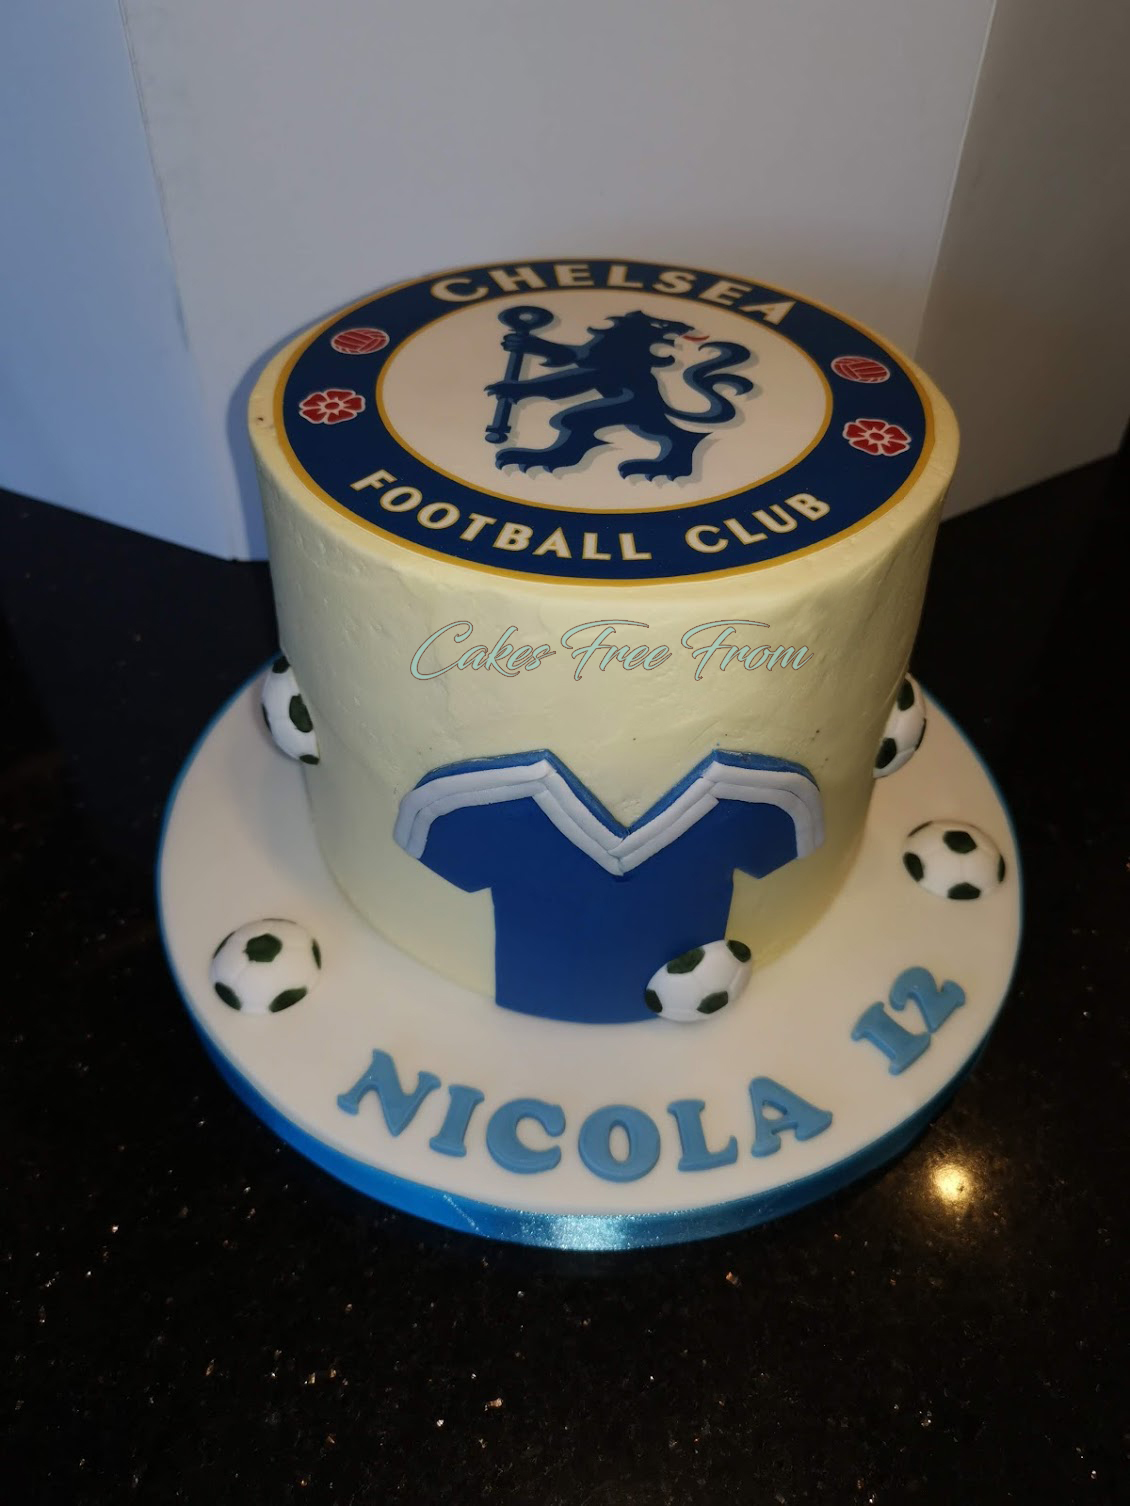 Chelsea Cake